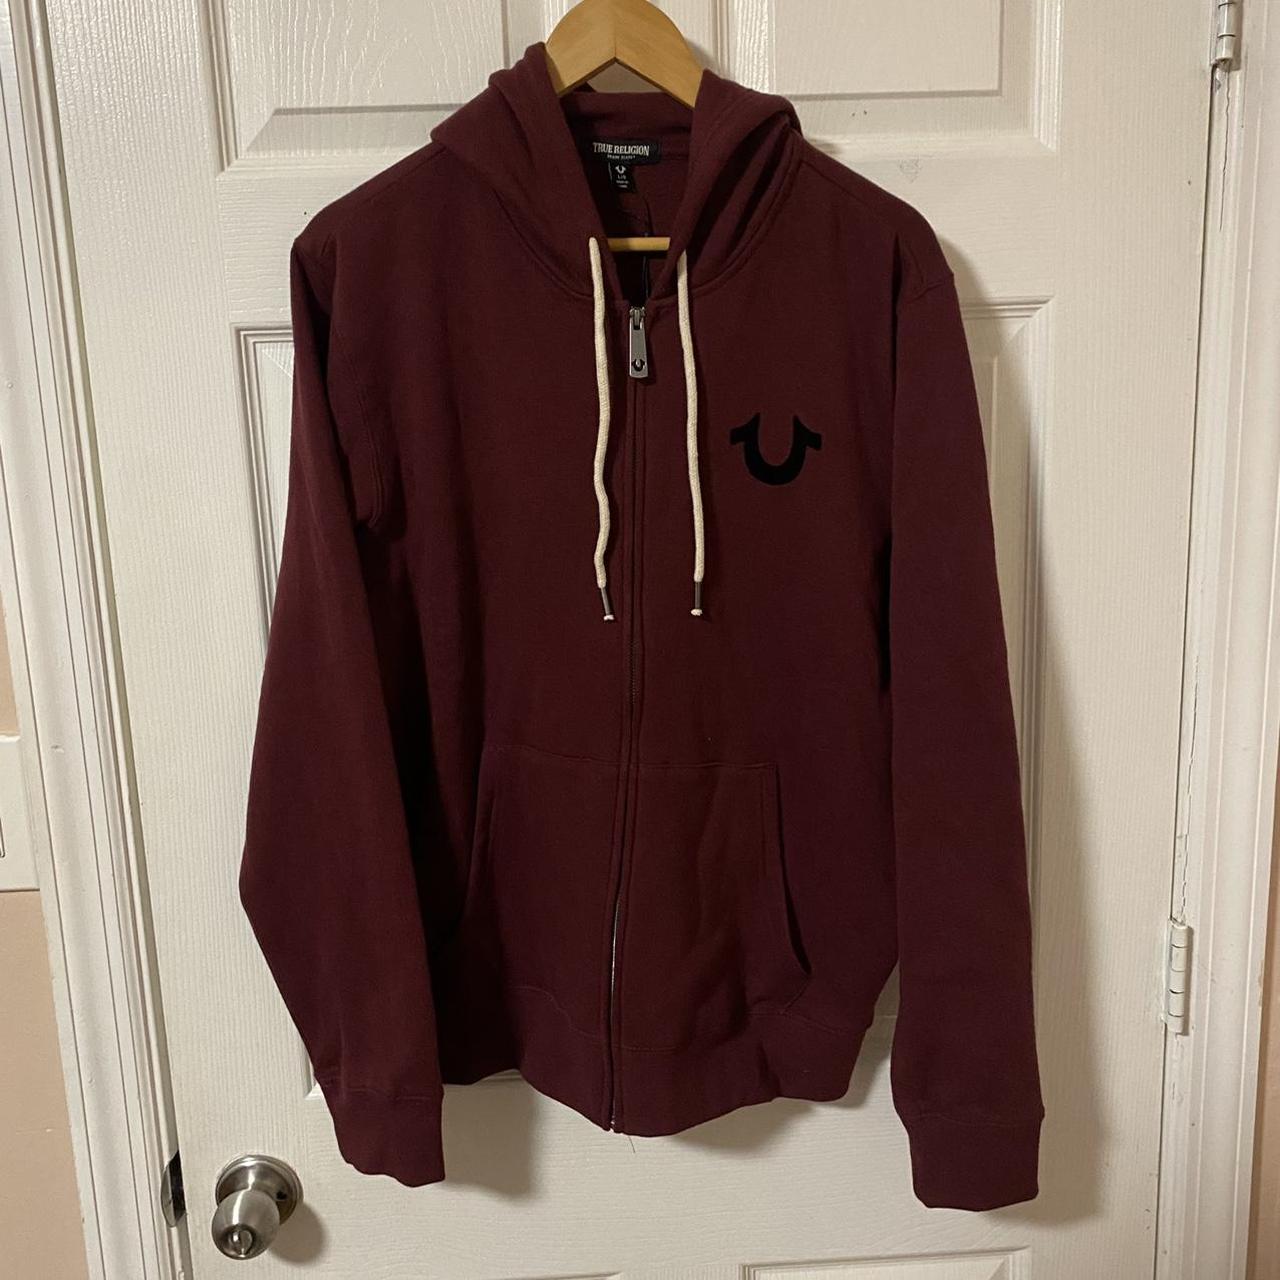 True Religion classic logo zip up hoodie